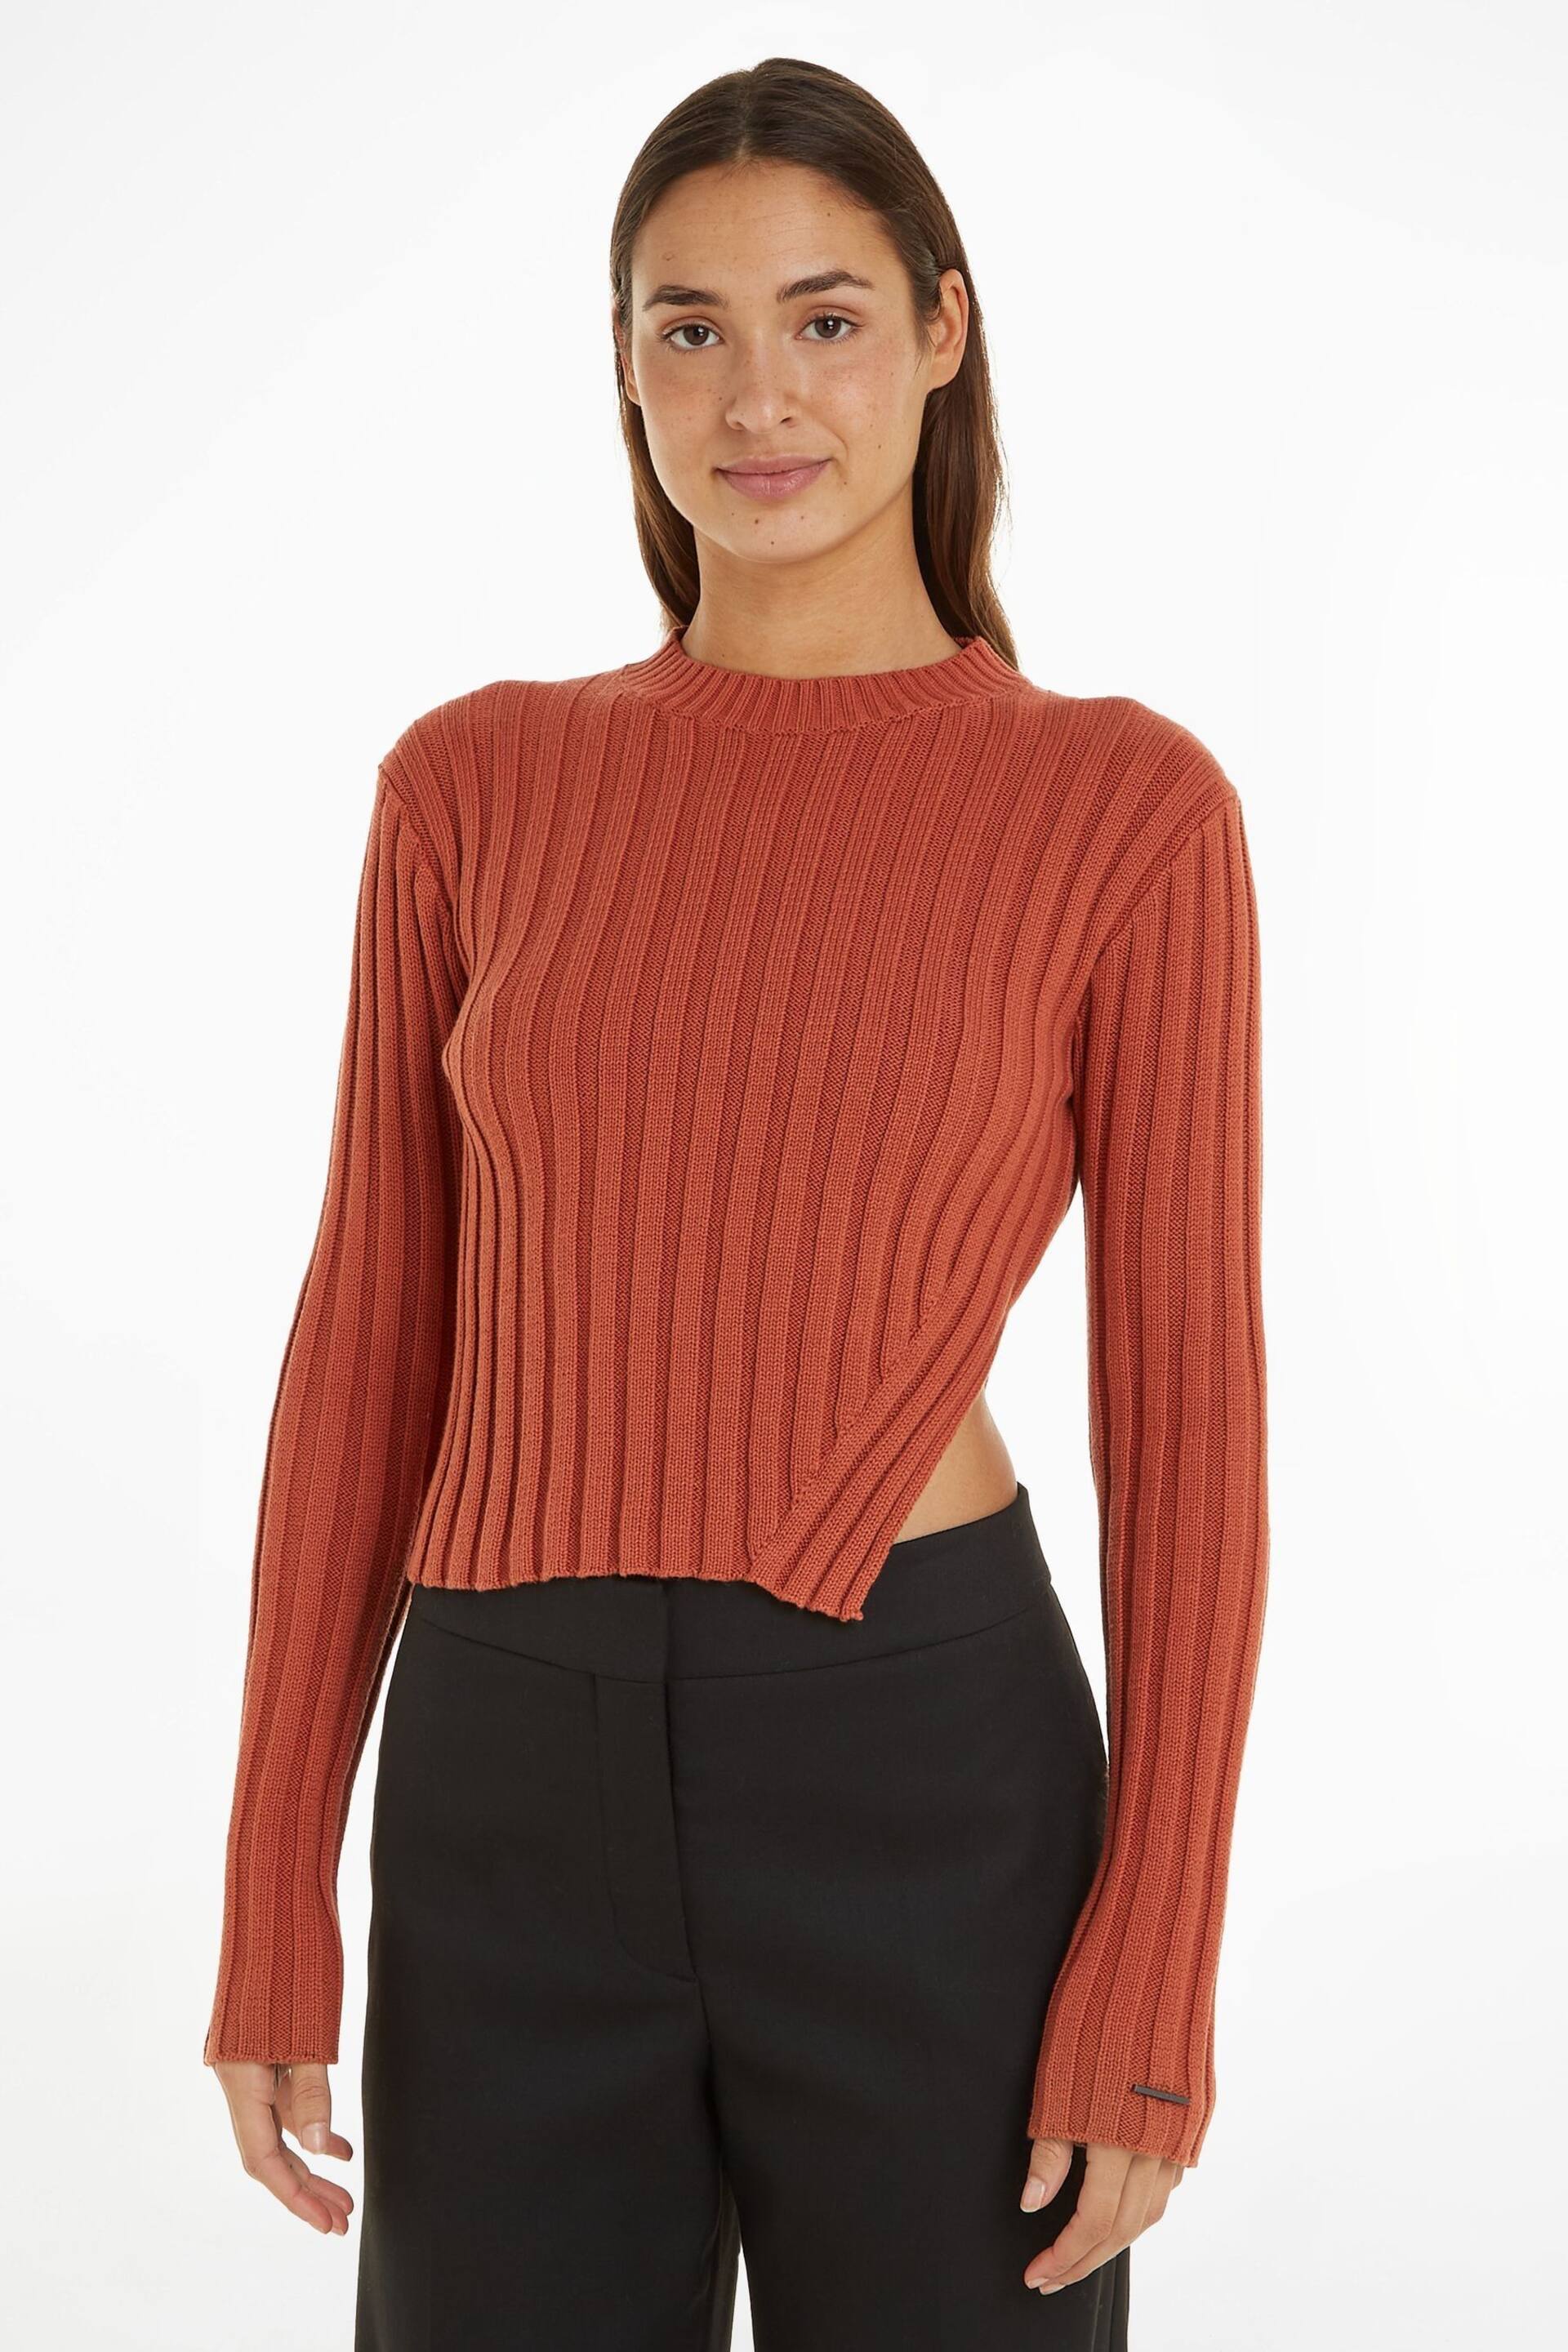 Calvin Klein Brown Cotton Blend Split Sweater - Image 1 of 6